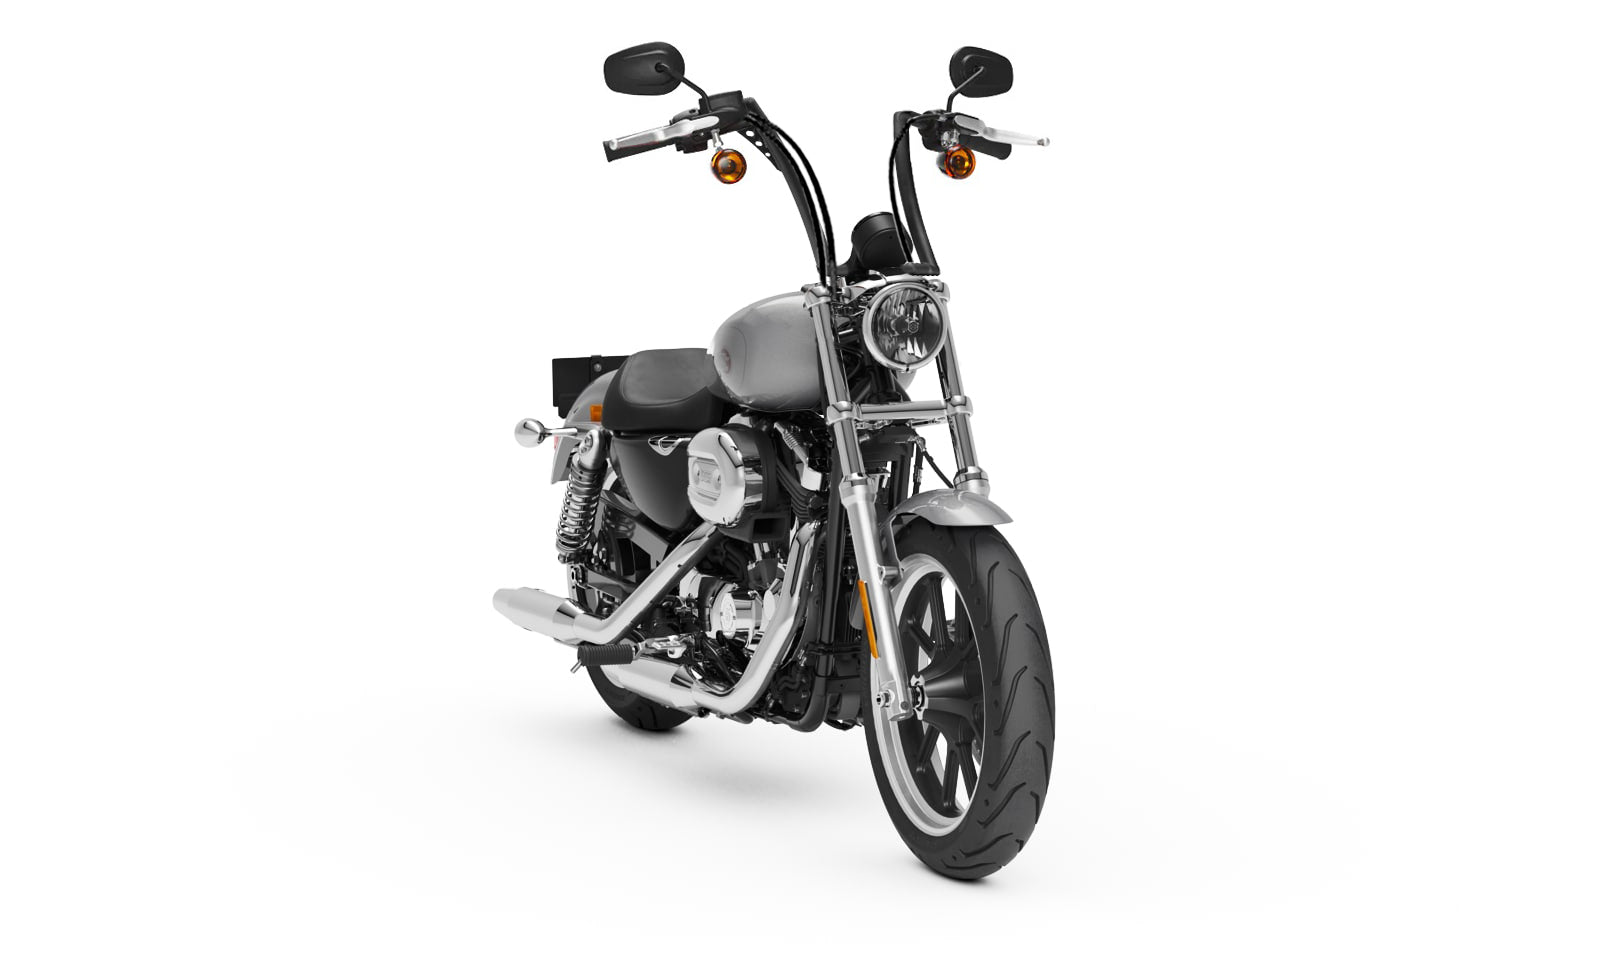 Viking Iron Born 12" Handlebar for Harley Sportster Superlow Matte Black Bag on Bike View @expand